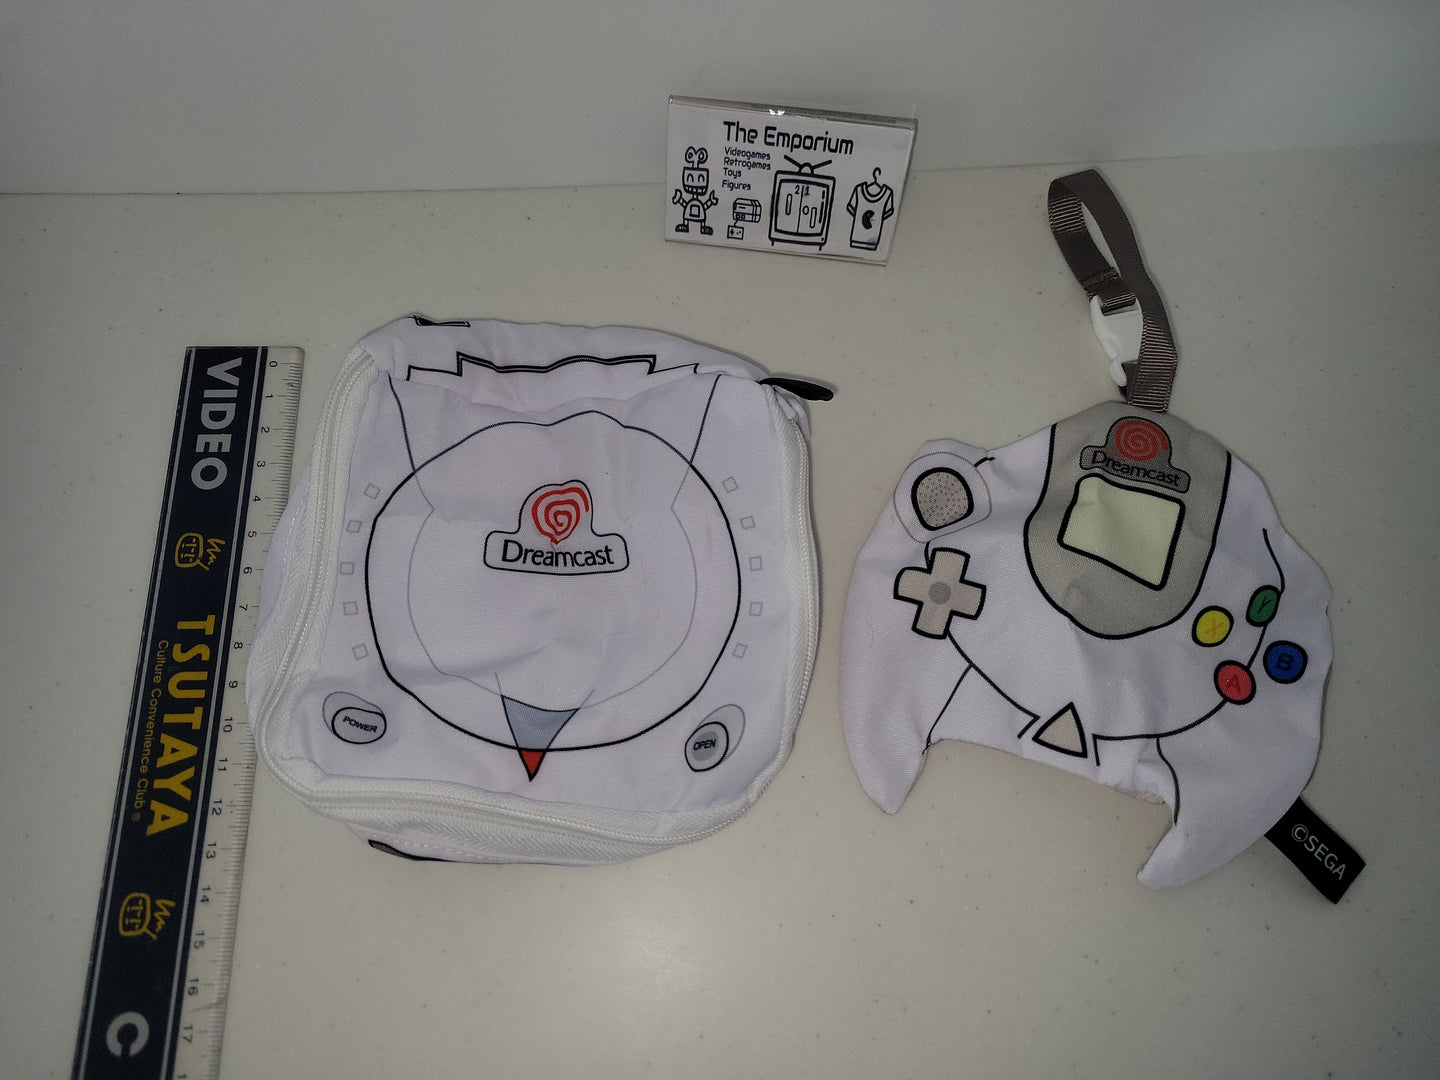 Sega Dreamcast - sega history collection pouch mini console series - toy action figure gadgets